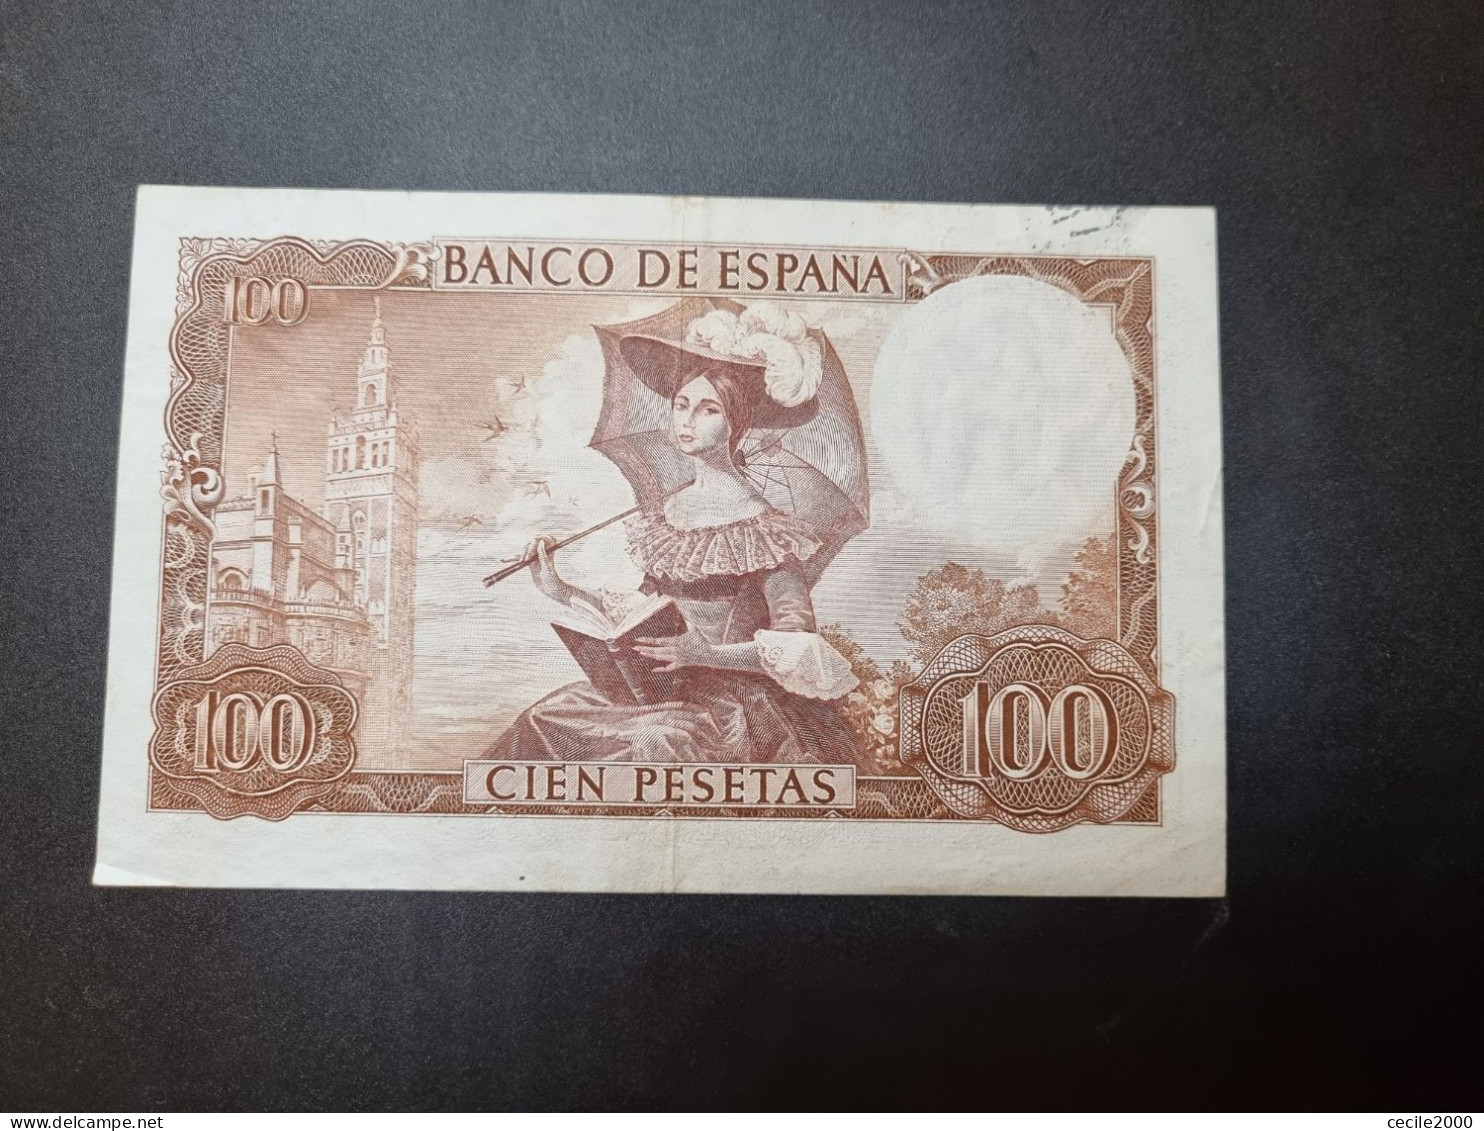 4x SIN SERIE BILLETS ESPAGNE SPAIN BANKNOTE LOT 100 PESETAS 1965 XF+/aUNC BILLETE ESPAÑA *COMPRAS MULTIPLES CONSULTAR*